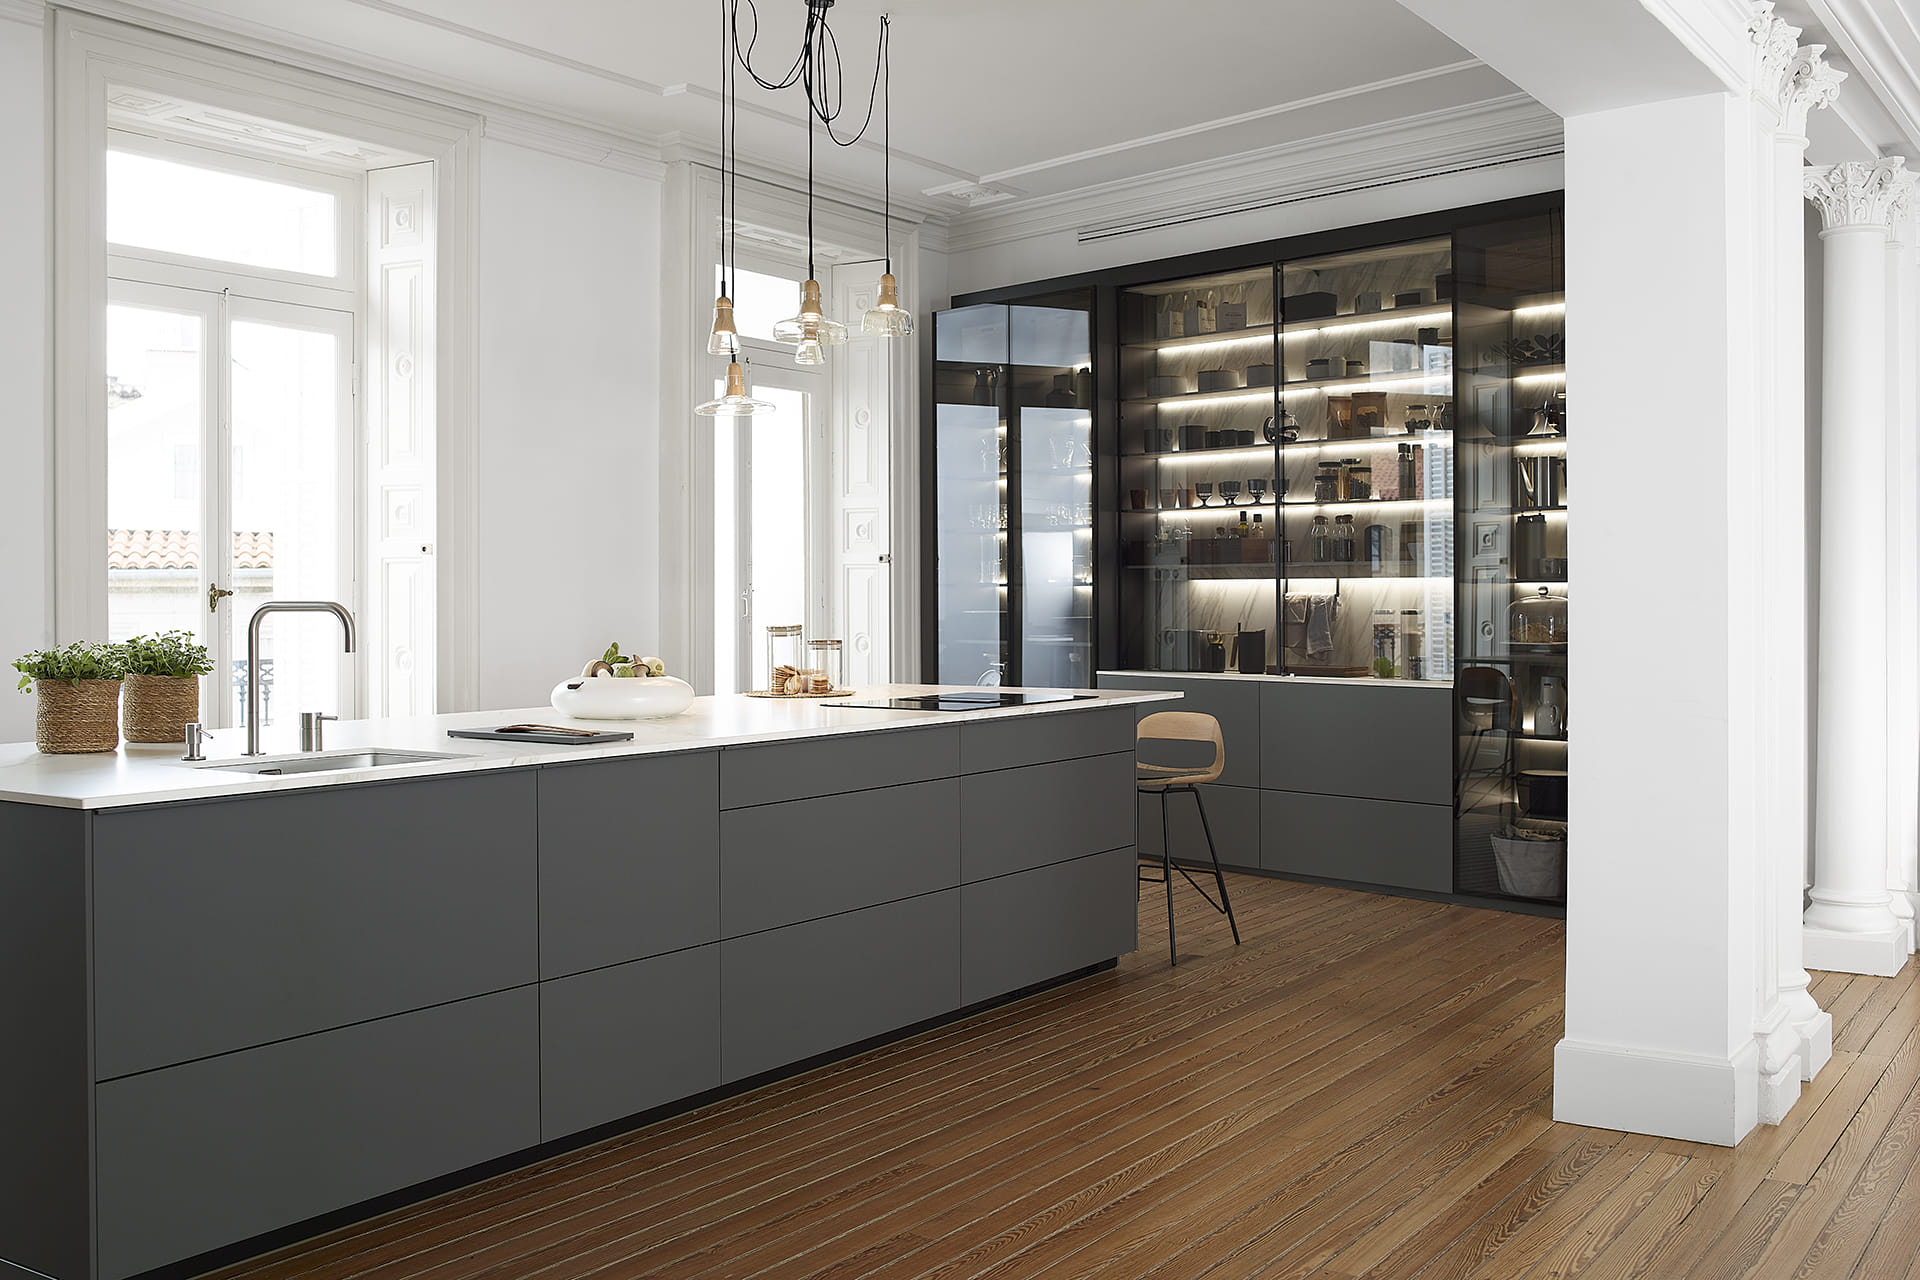 Grey Santos kitchen with island and glass door unit